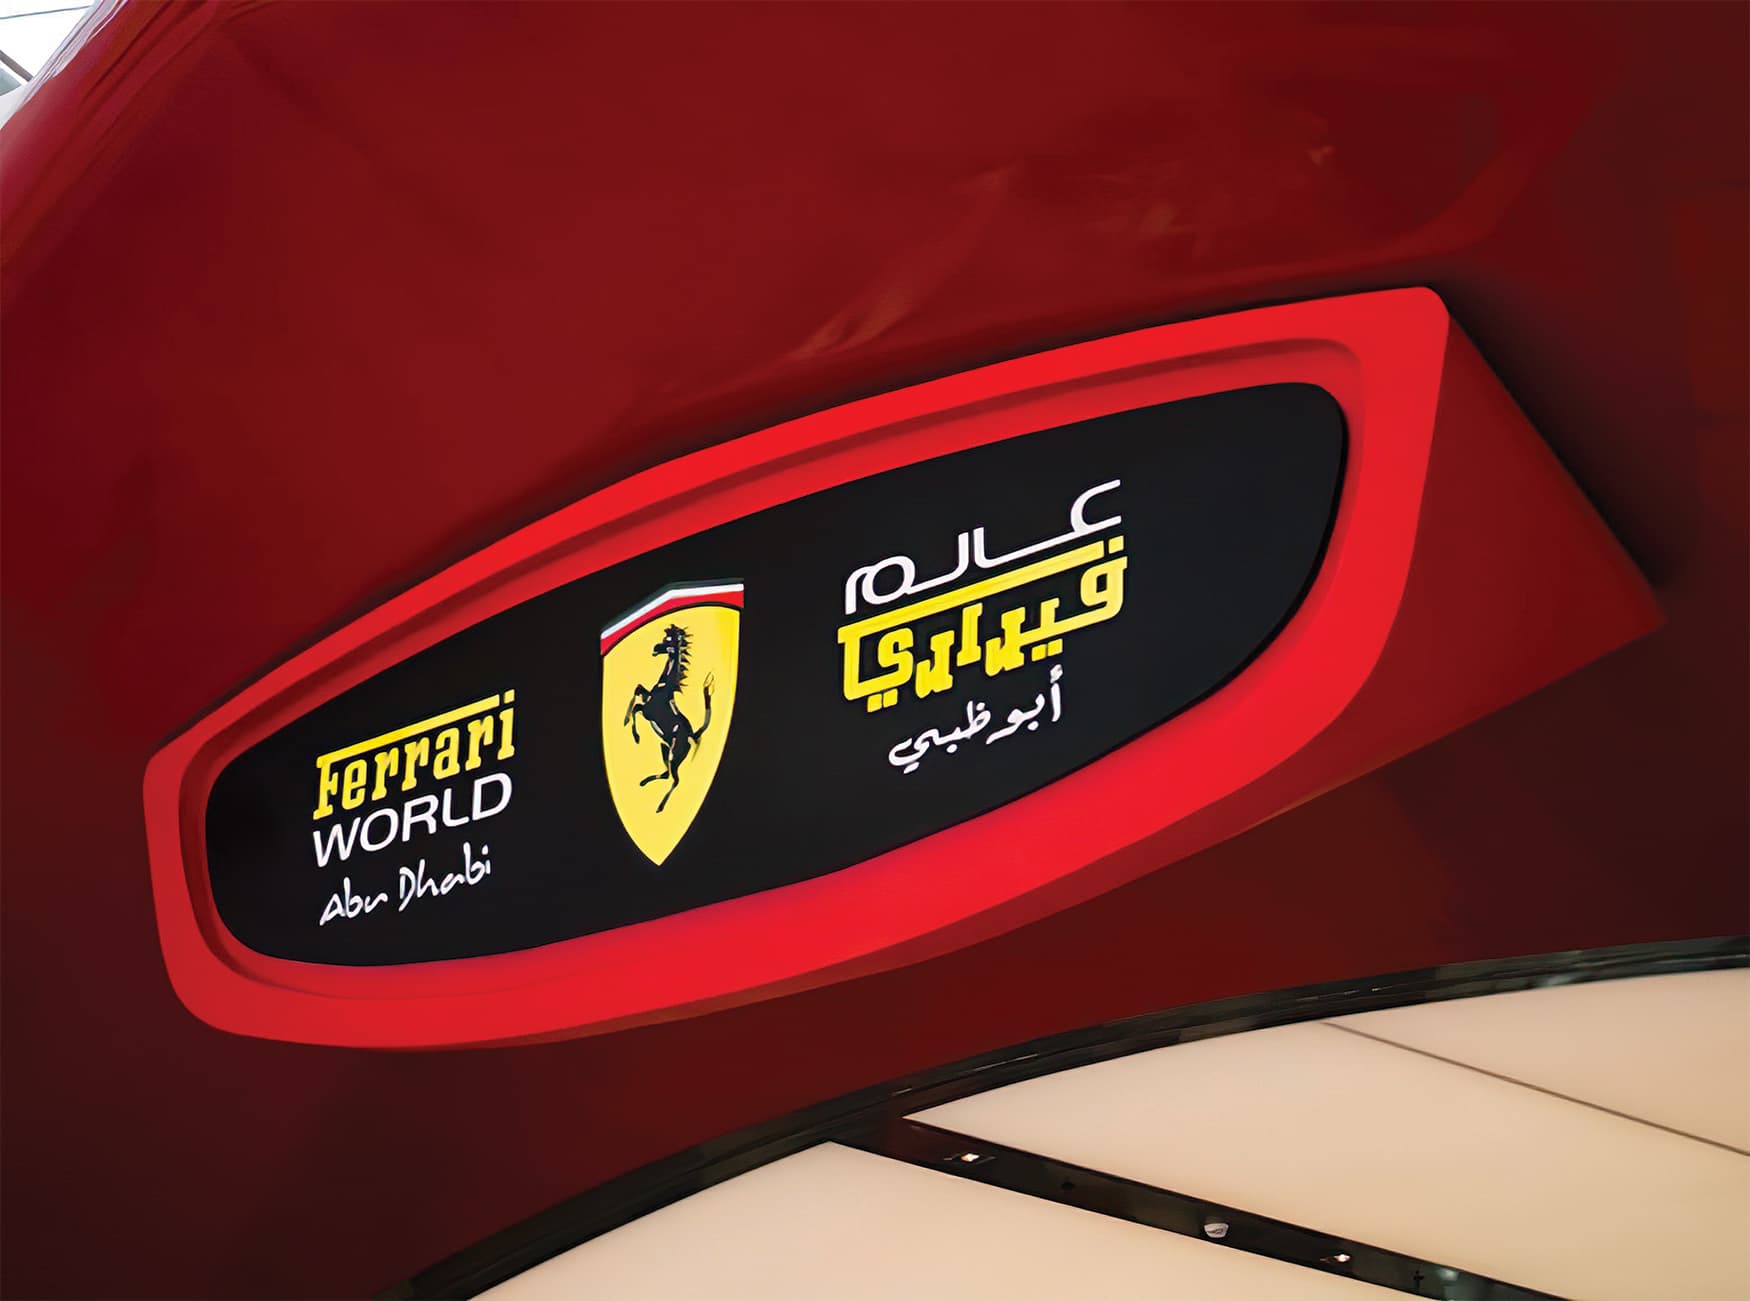 Ferrari World in Abu Dhabi in the United Arab Emirates. Indoor Theme Park Project Identity Signage. 